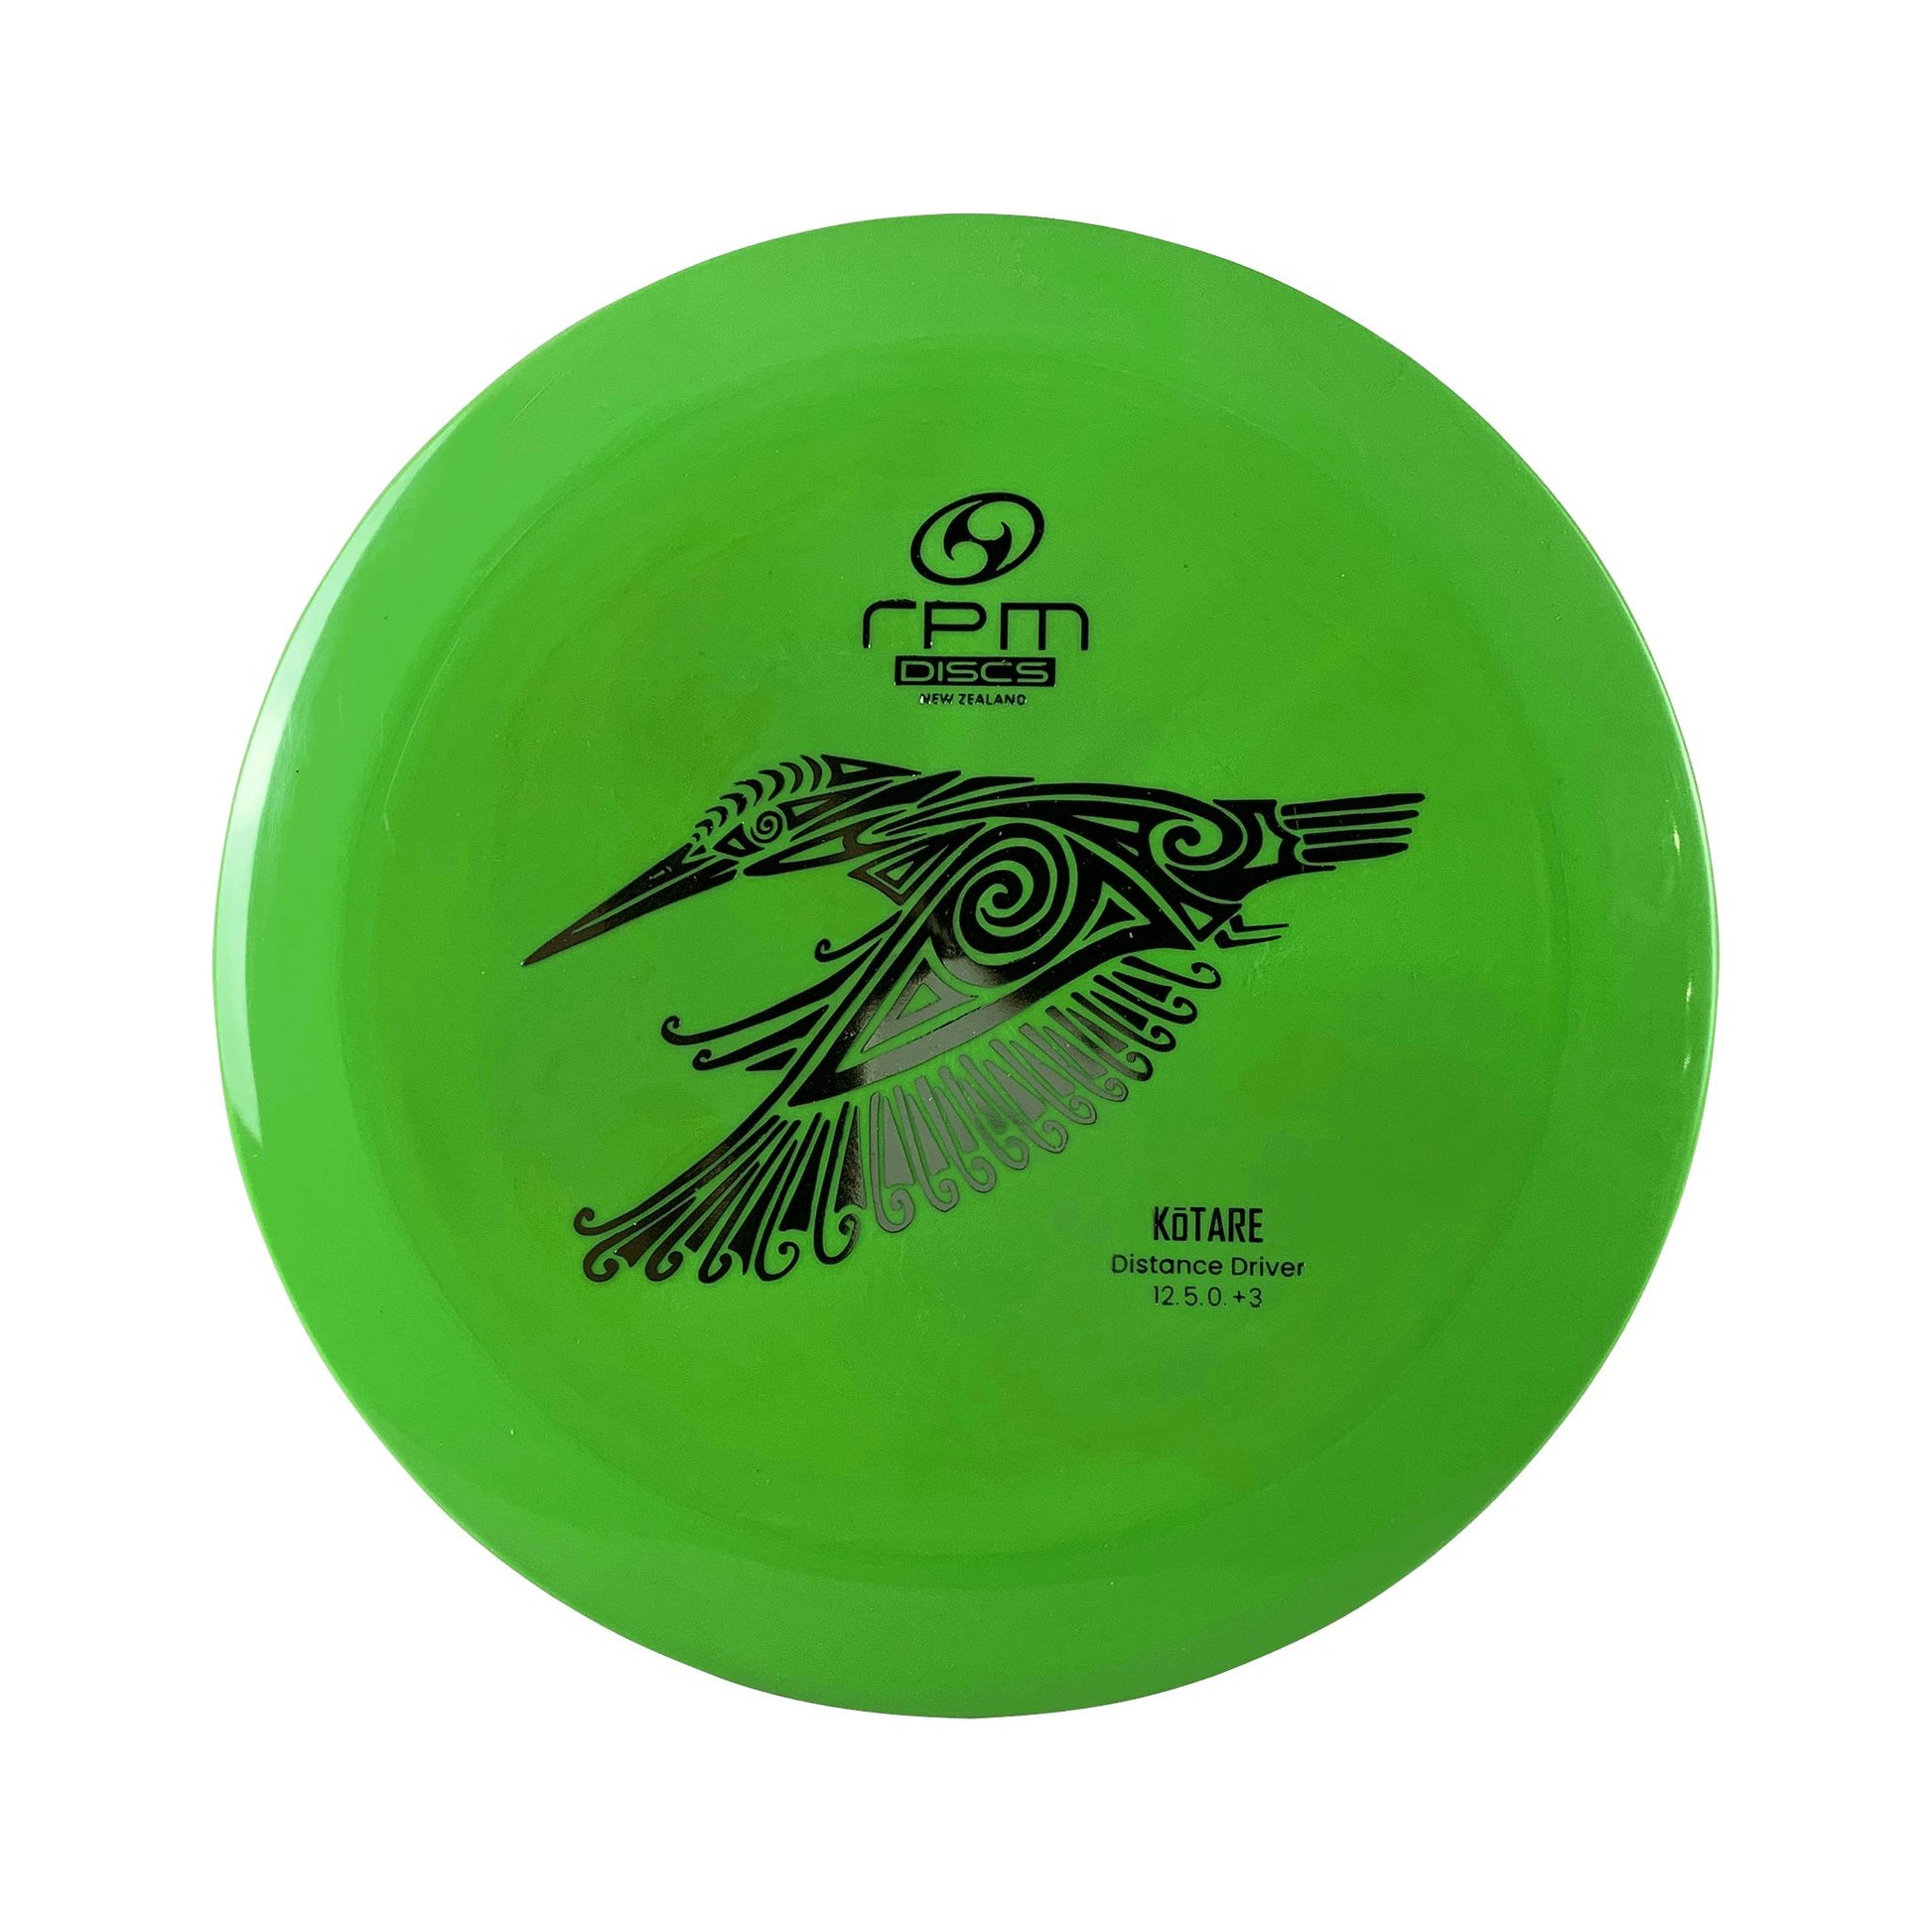 Atomic Kotare Disc RPM Discs green 170 